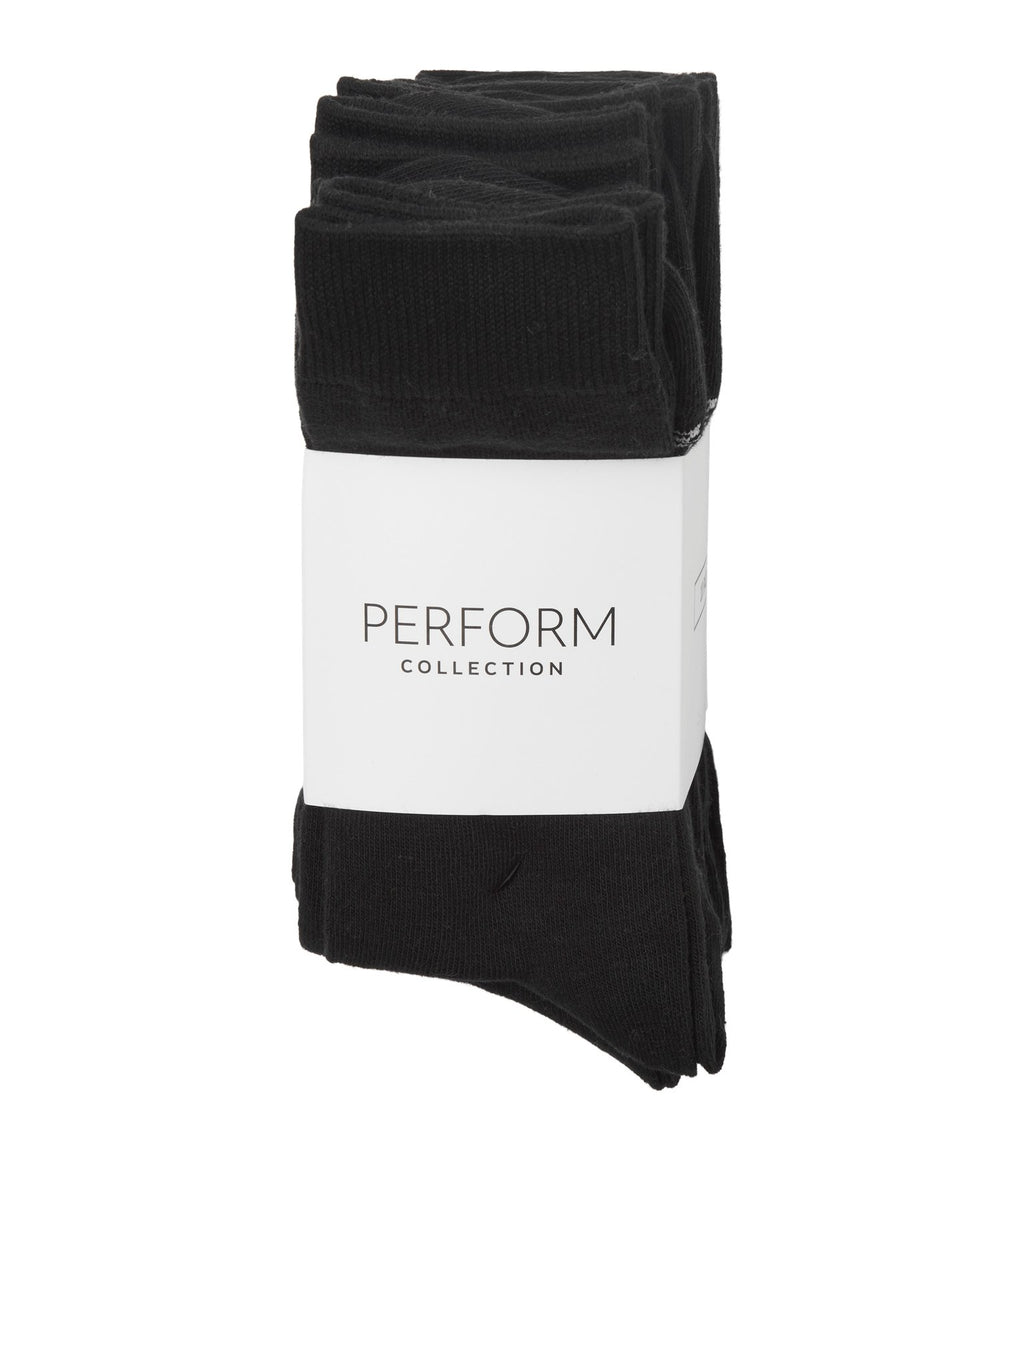 Performance Κορμούς (3-pack) & Performance Κάλτσες (10 τεμ) - Πακέτο συμφωνία